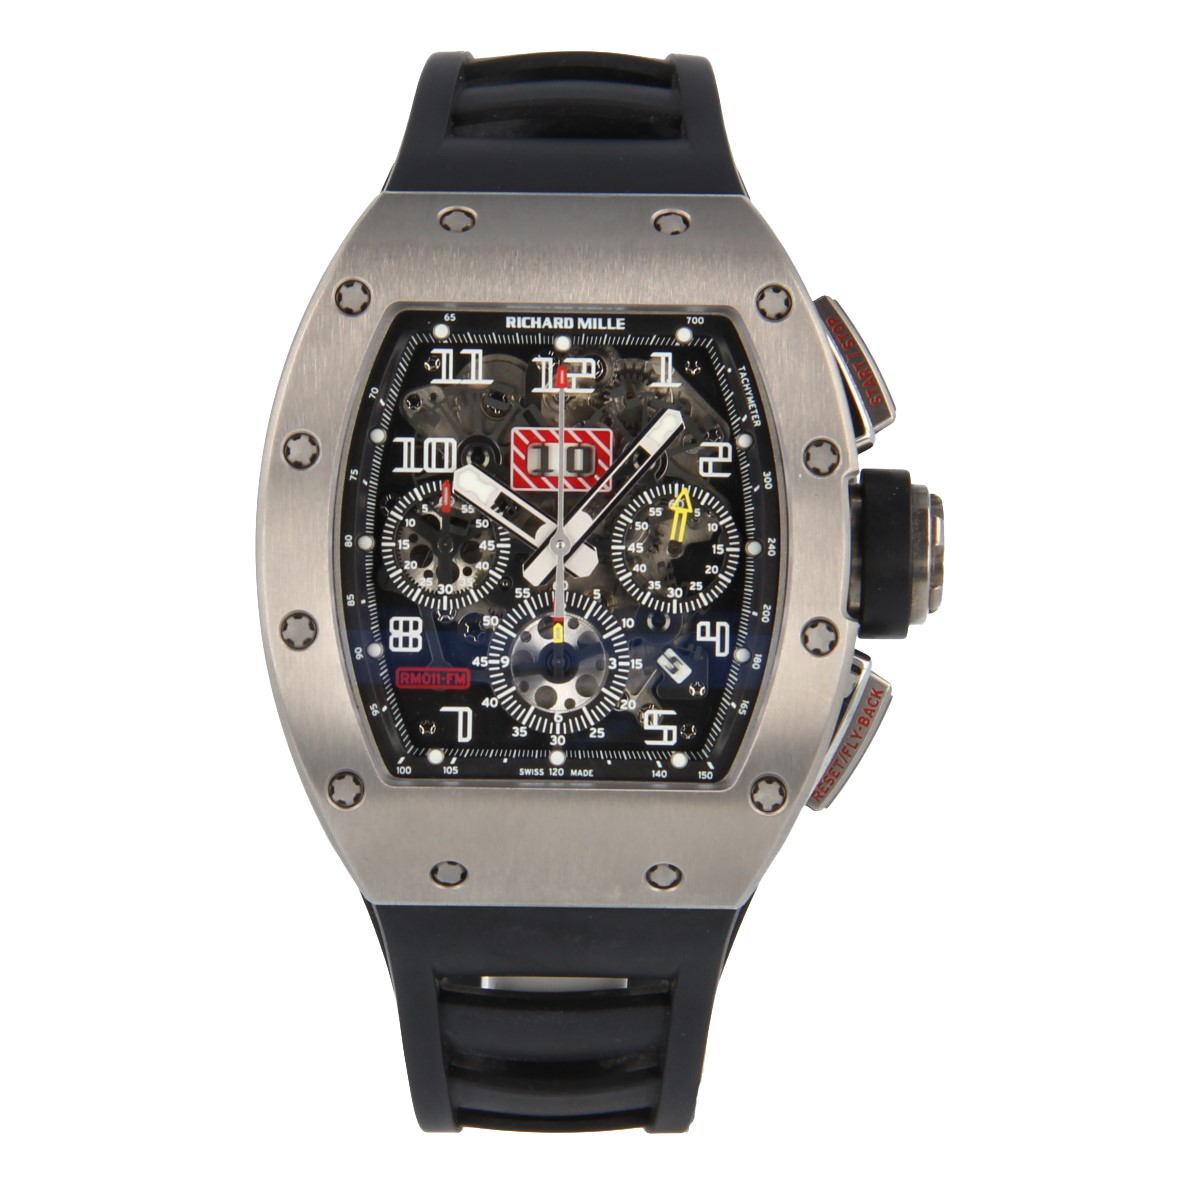 Richard Mille RM 011 Felipe Massa Titanium | Buy pre-owned Richard Mille watch